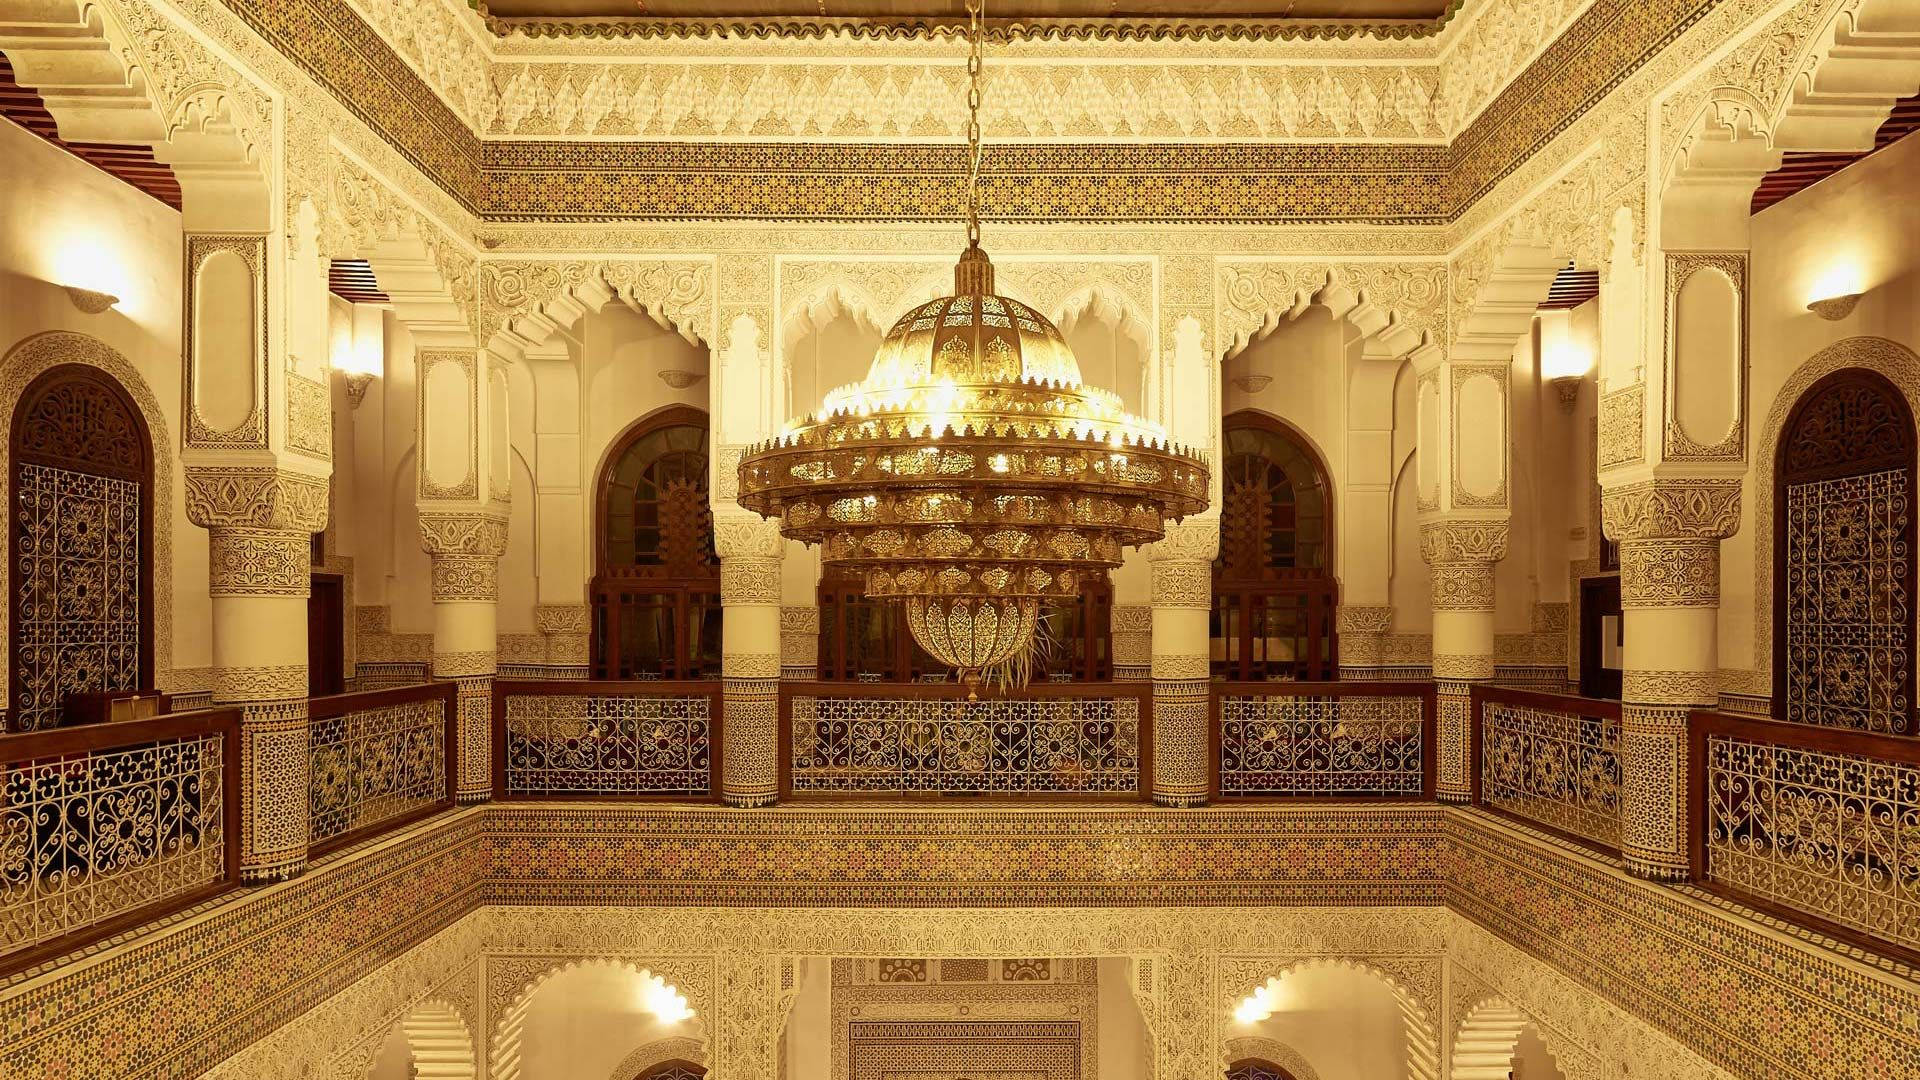 Riad Fes Hotel Morocco Wallpaper